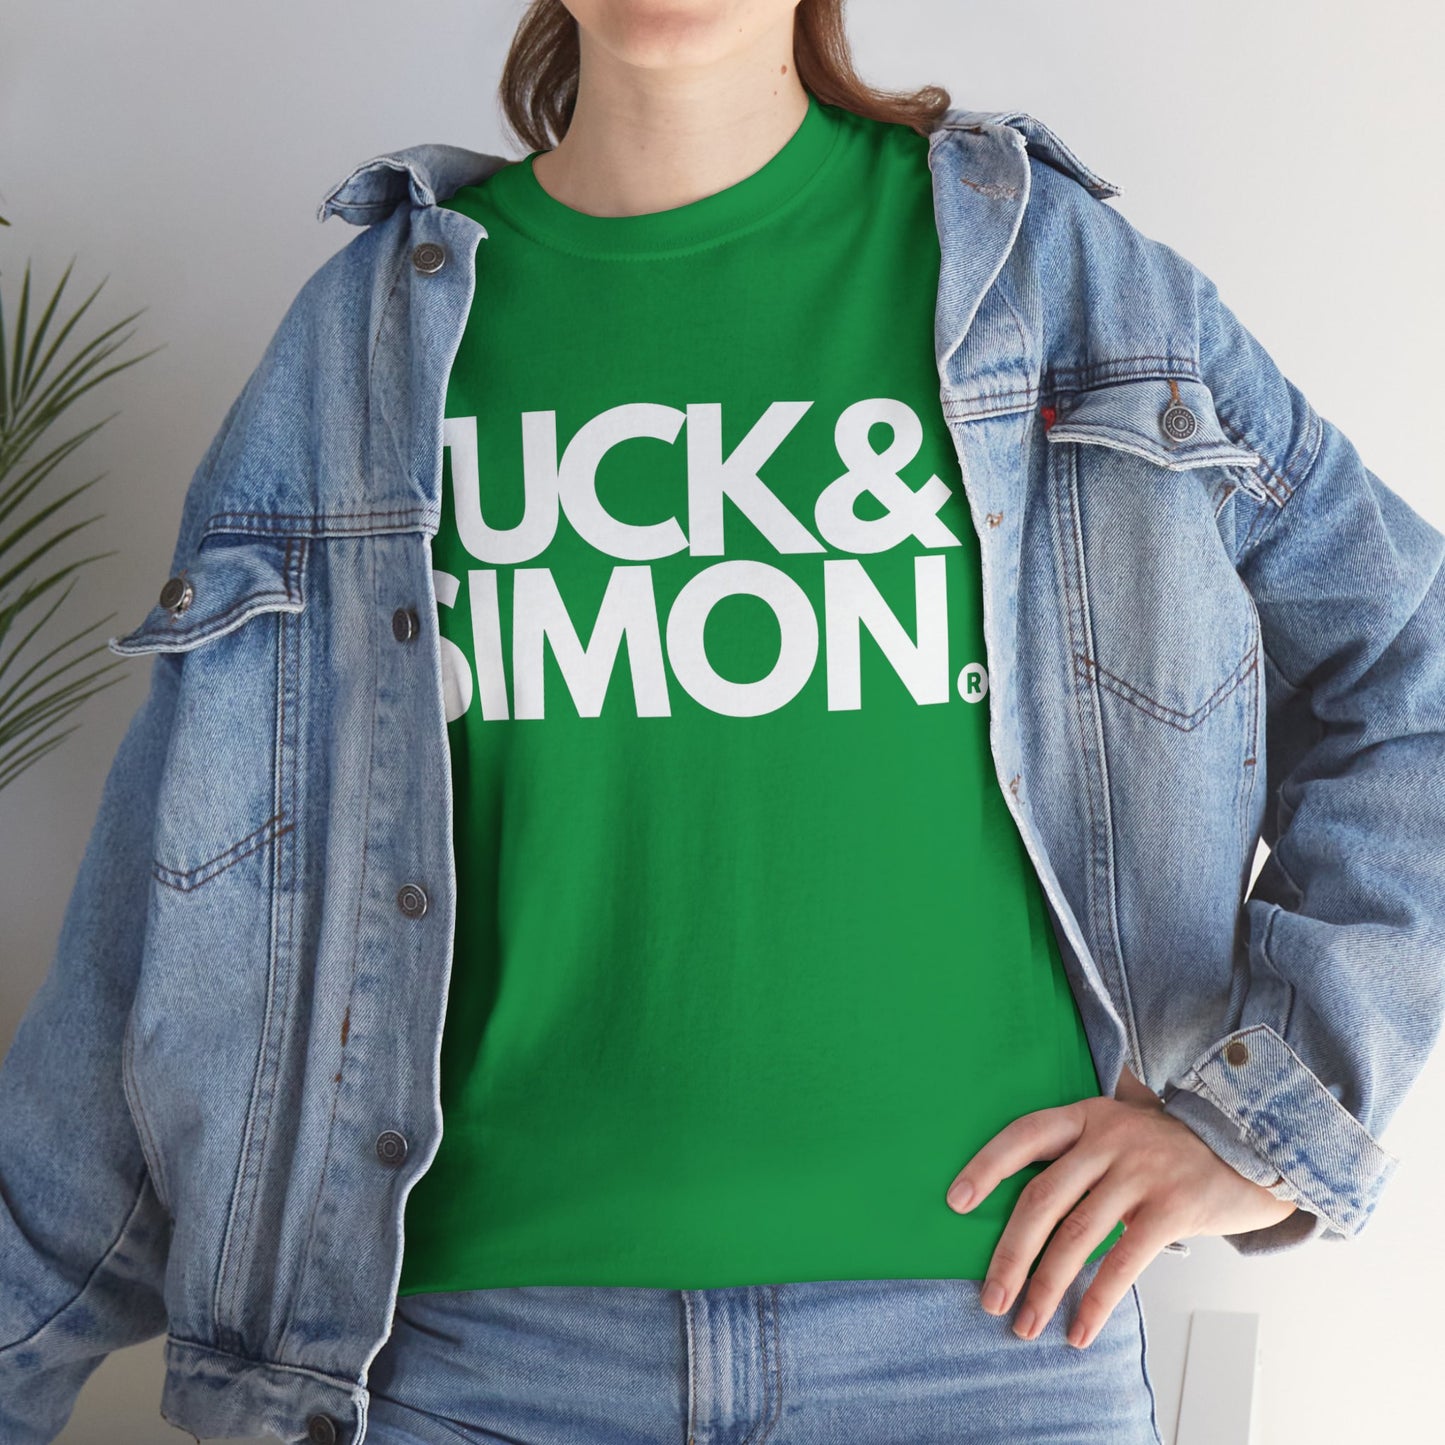 S-5XL Tuck&Simon Be Bold Classic Casuals T-Shirt